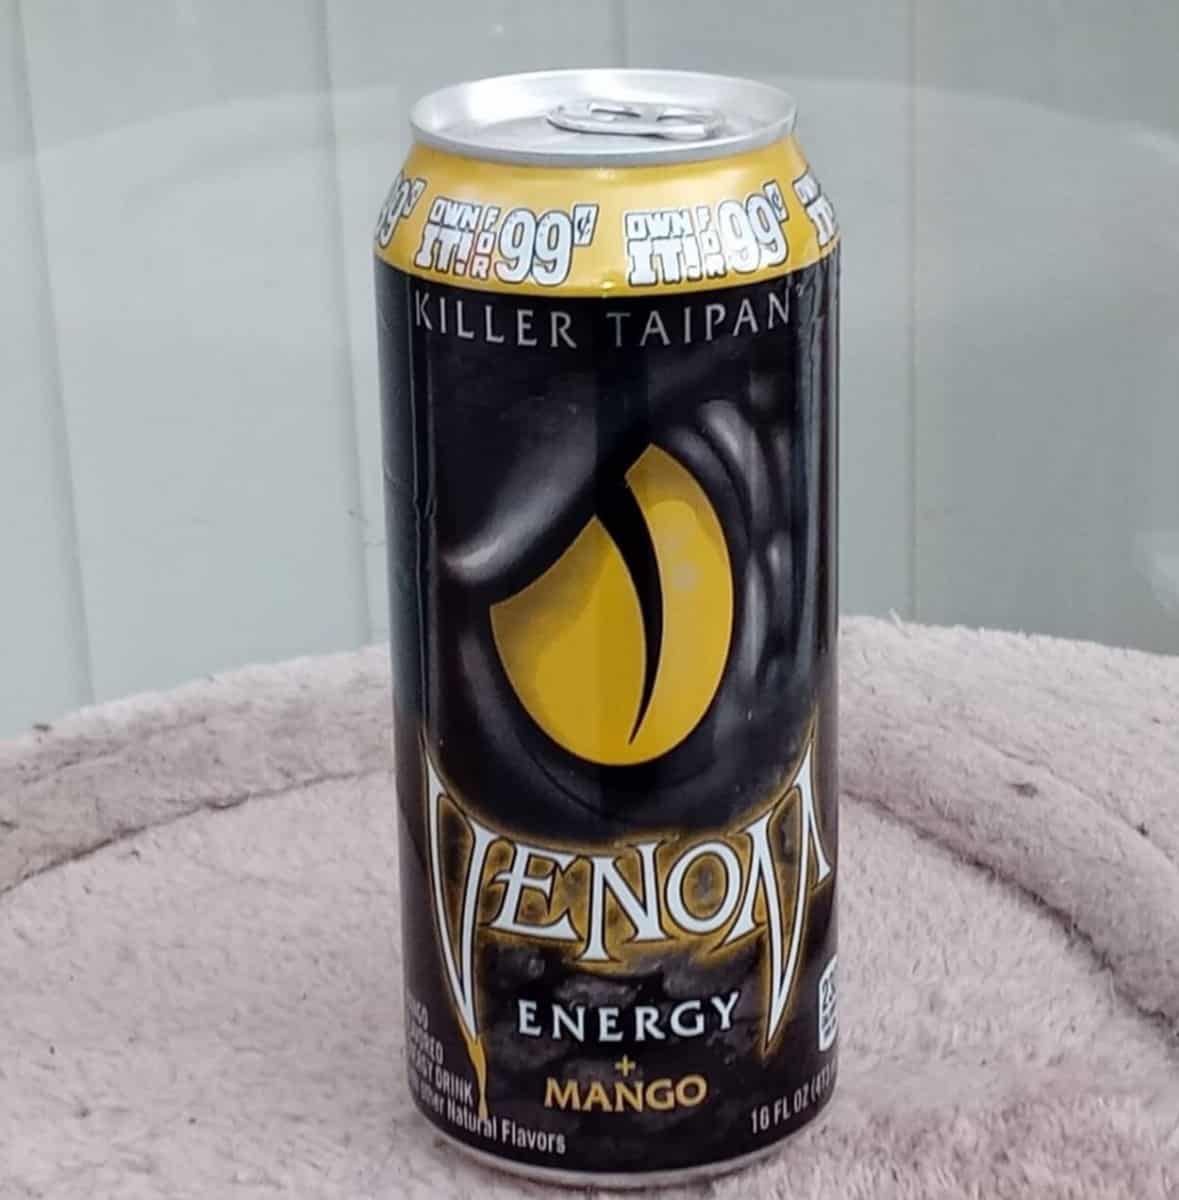 Venom Energy drink, Black can